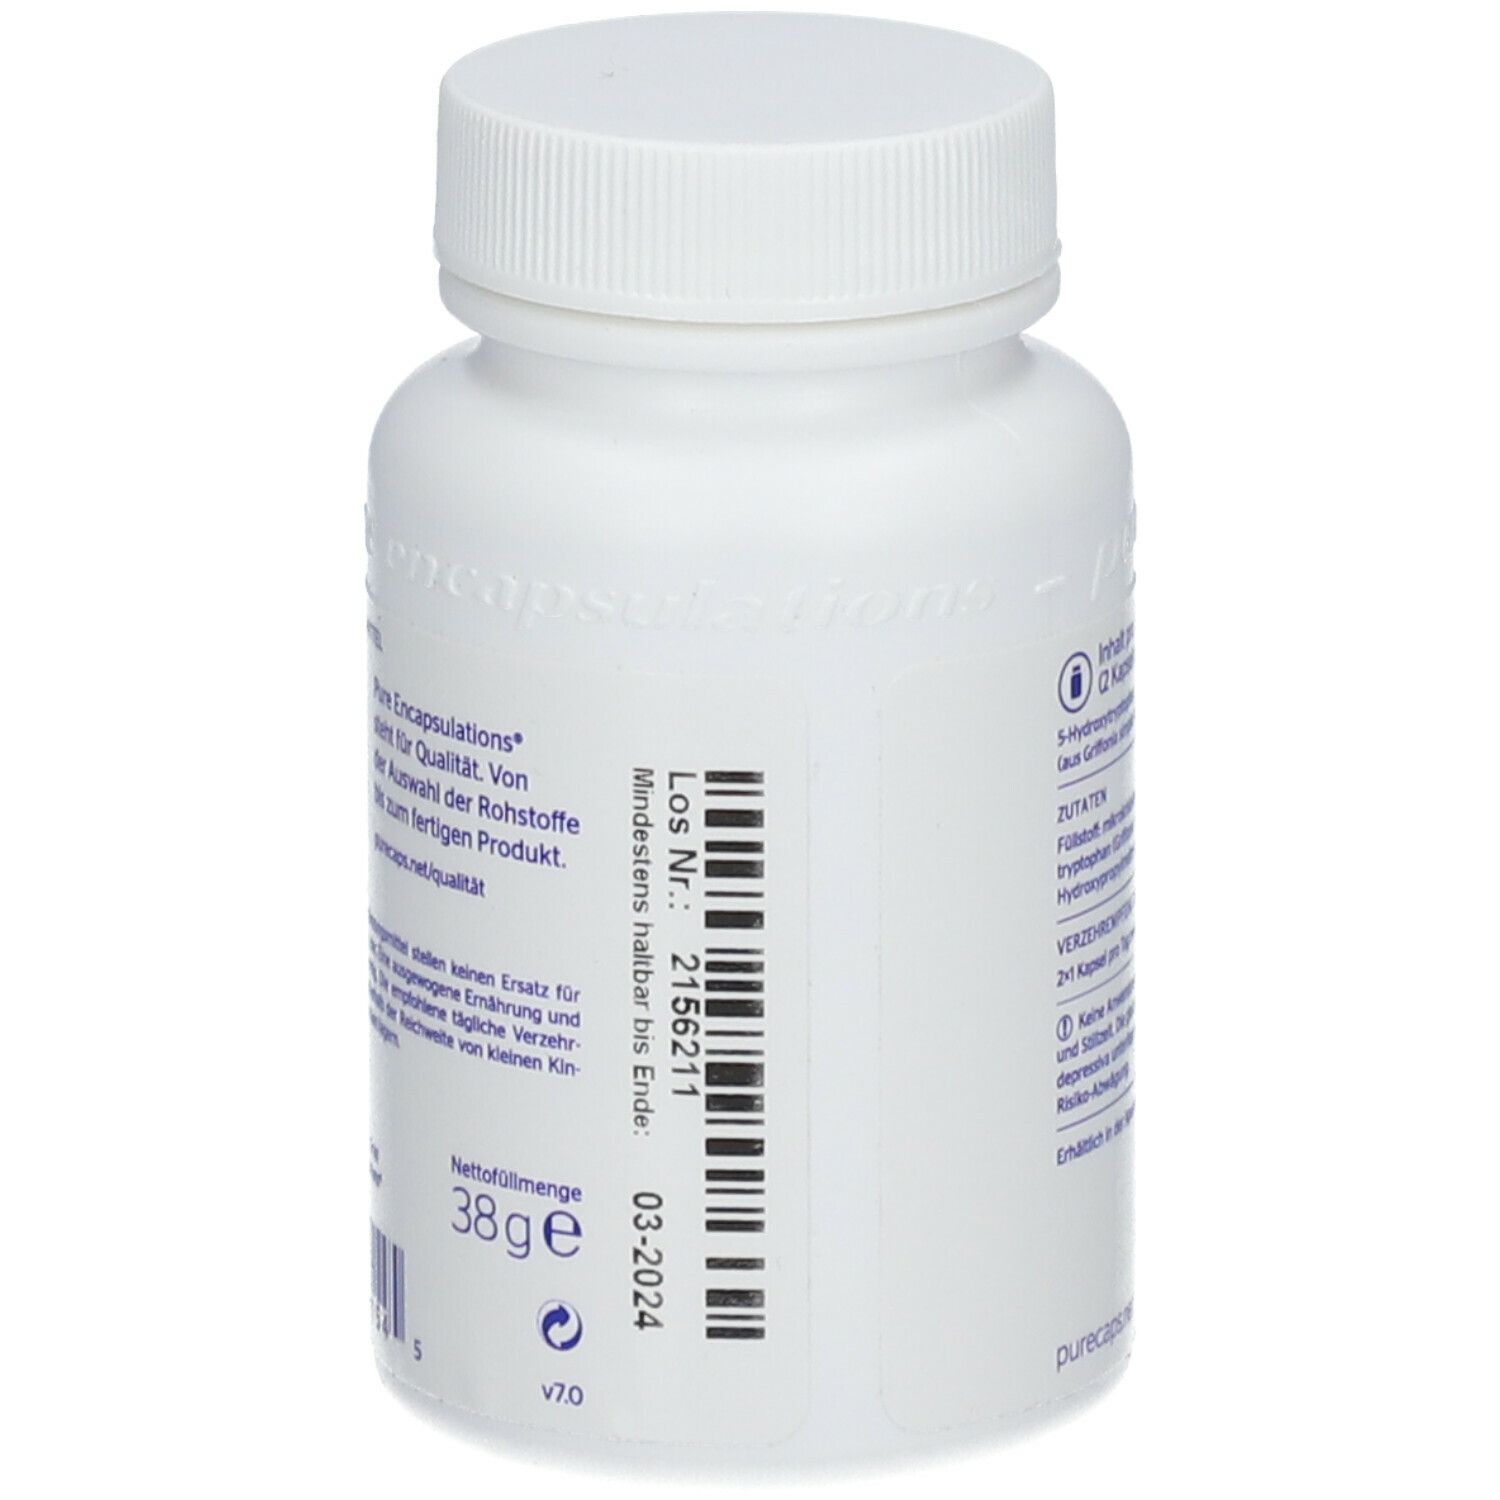 pure encapsulations® Hydroxytryptophan (5-HTP)